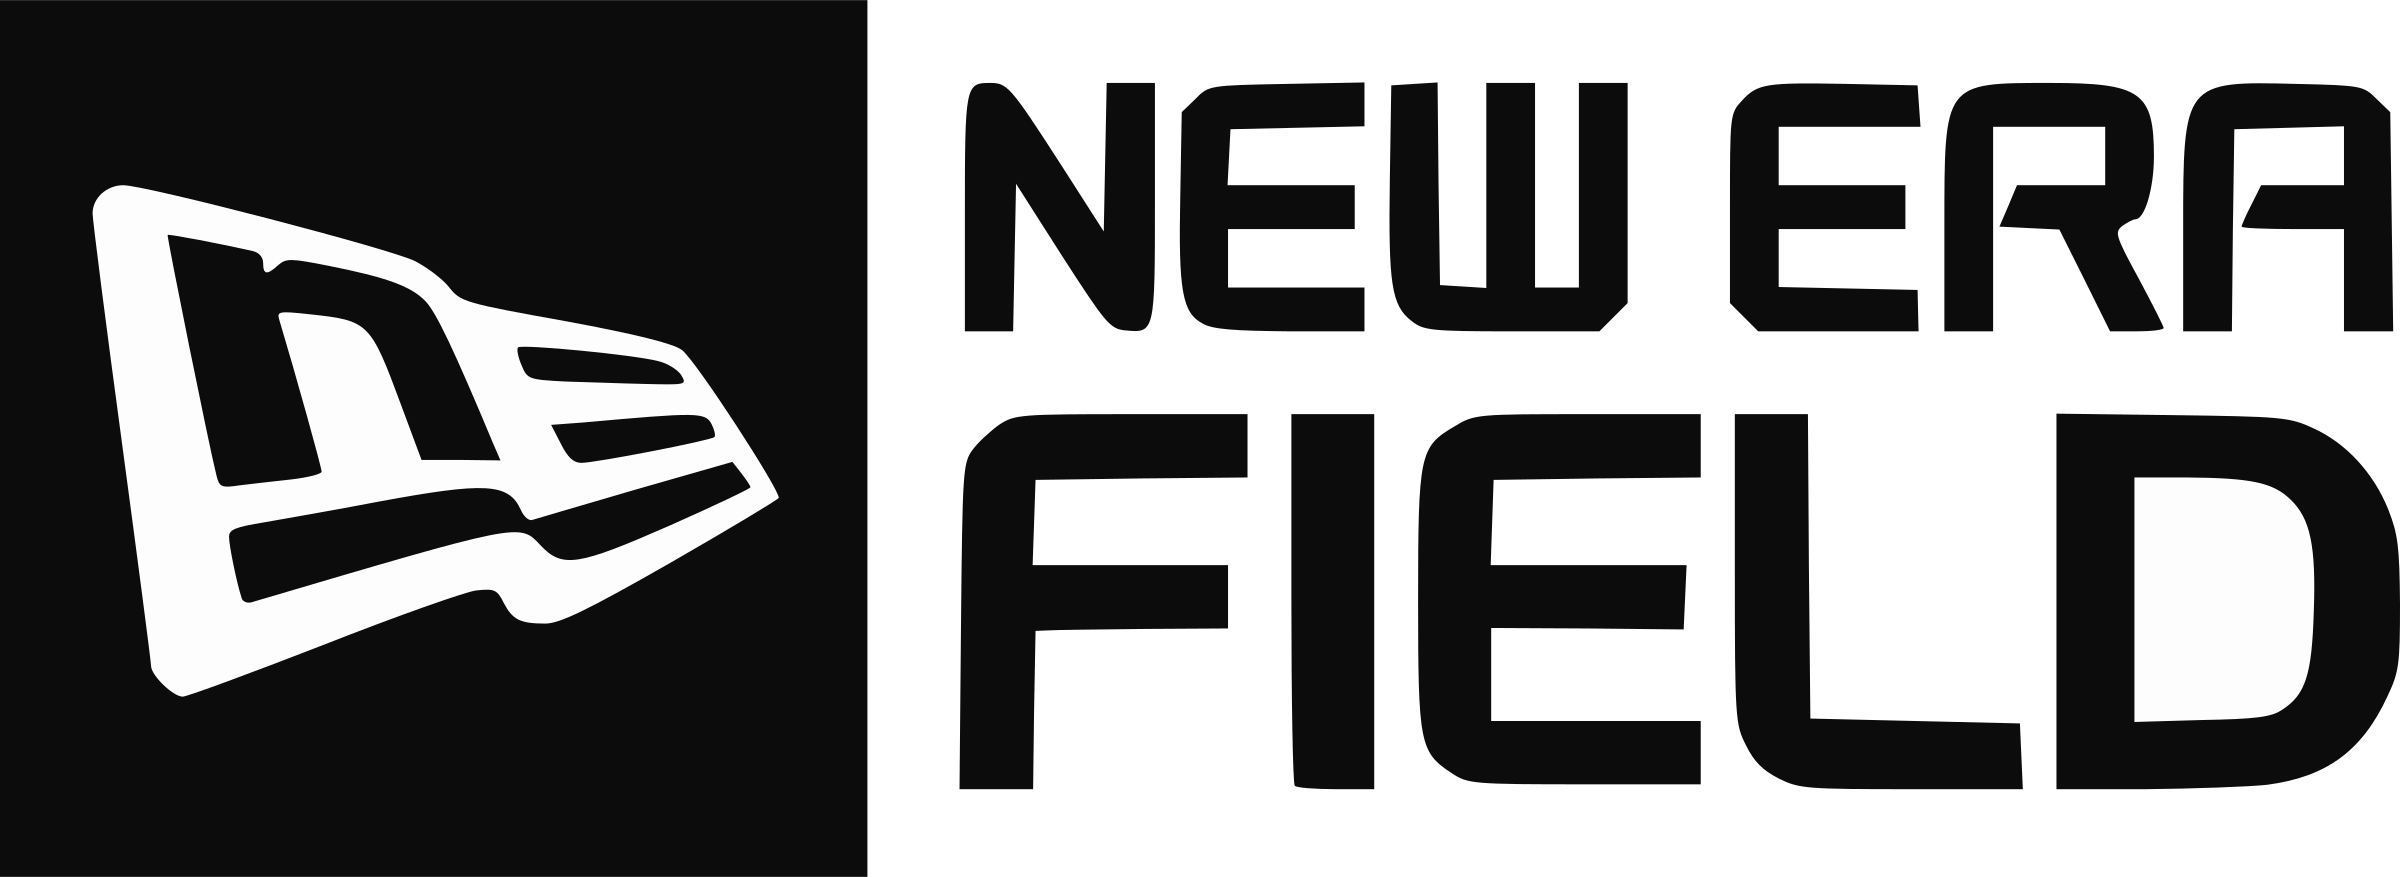 New Era Logo Png - New Era Field Logo (2400x877), Png Download